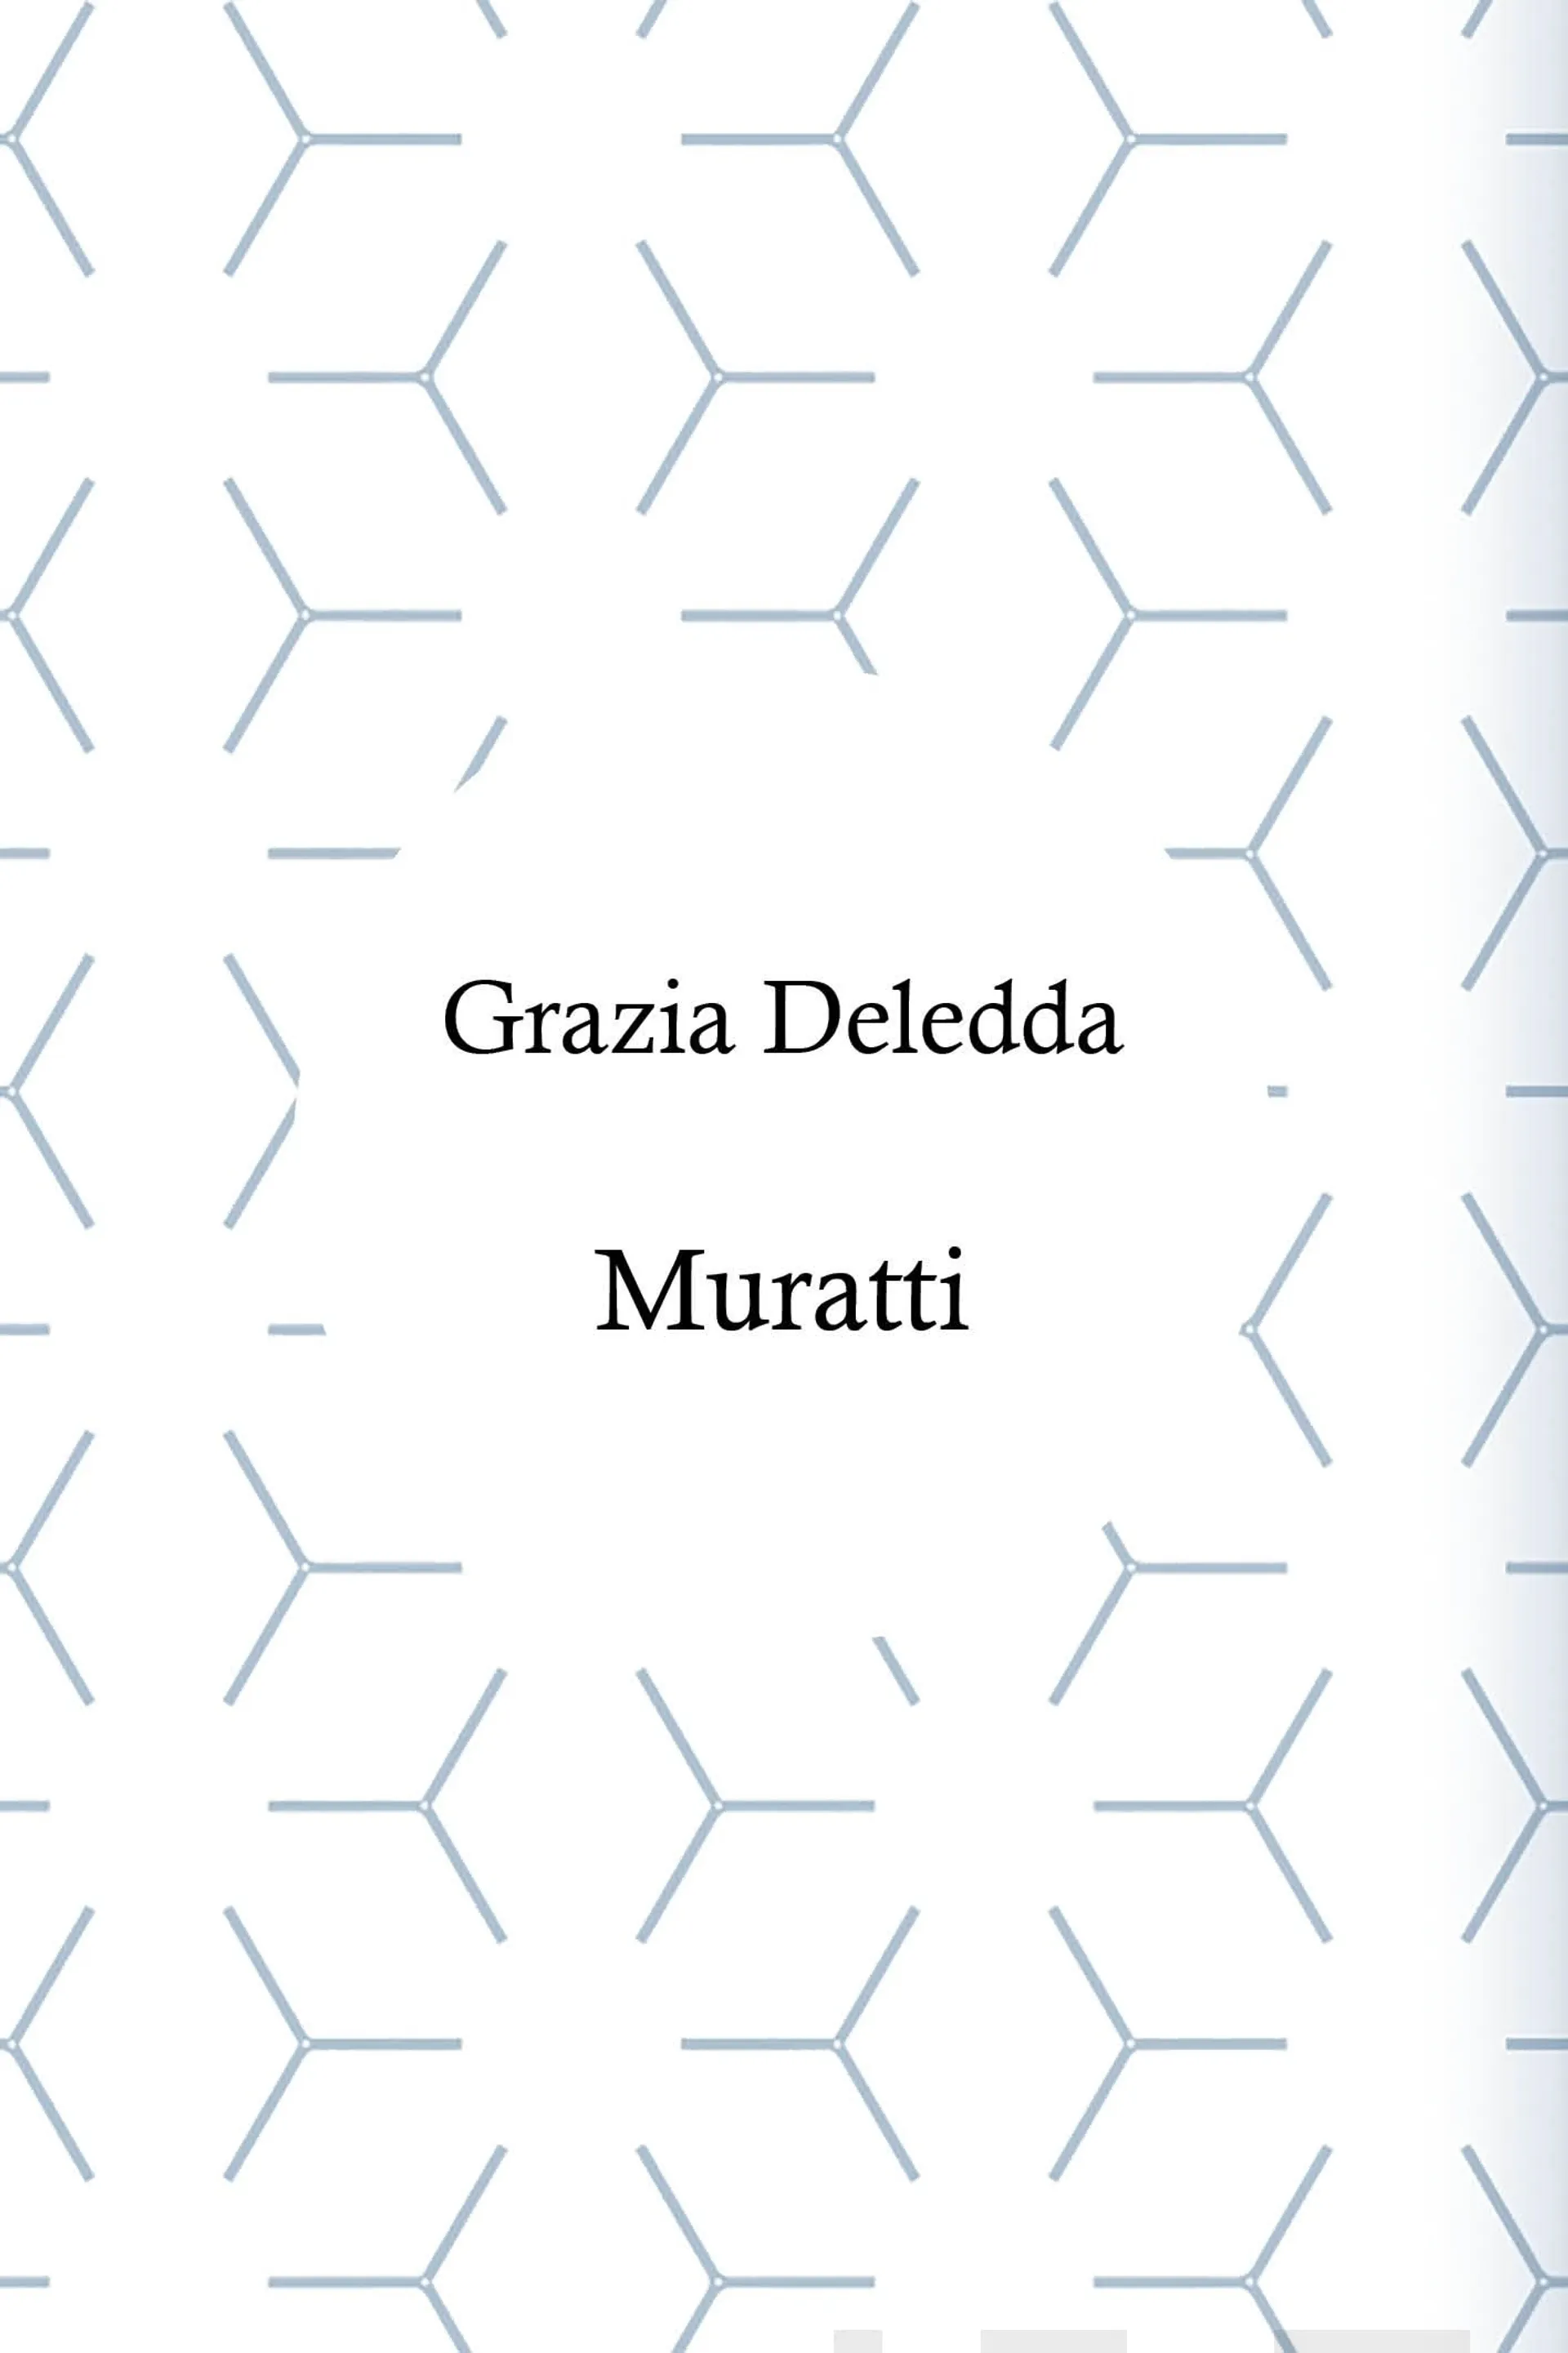 Deledda, Muratti